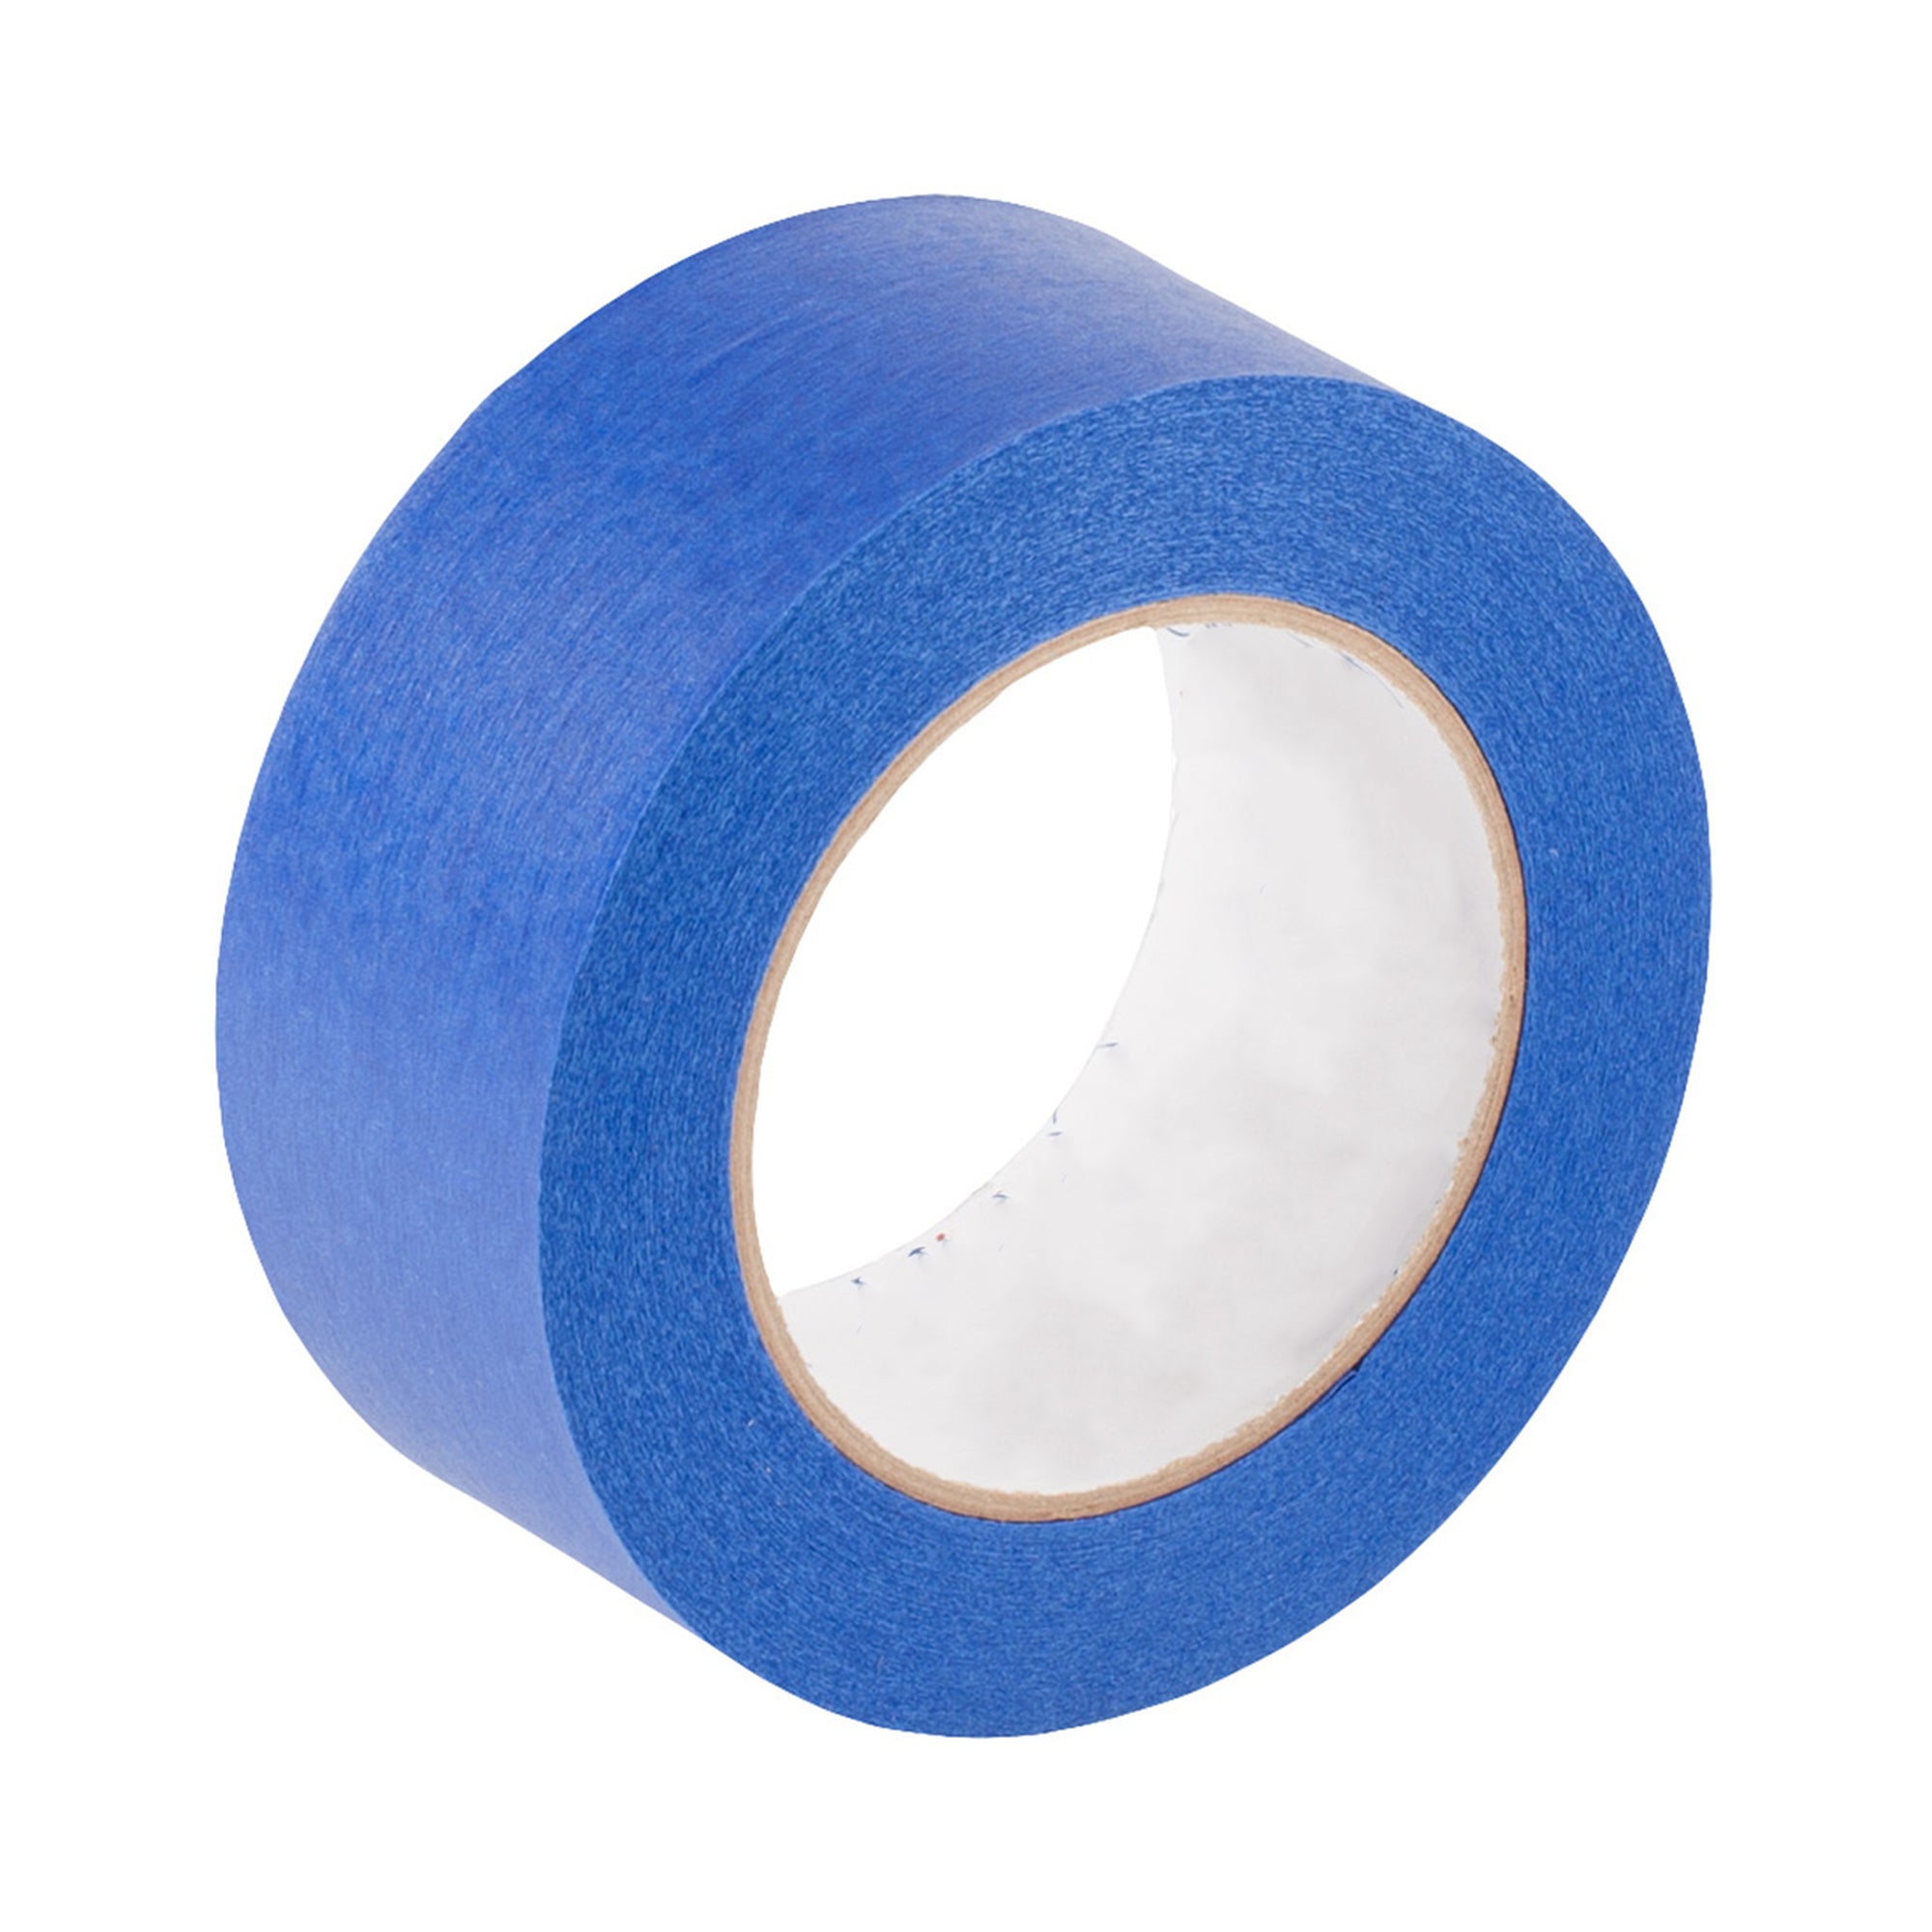 Painter's Tape Roll - Blue